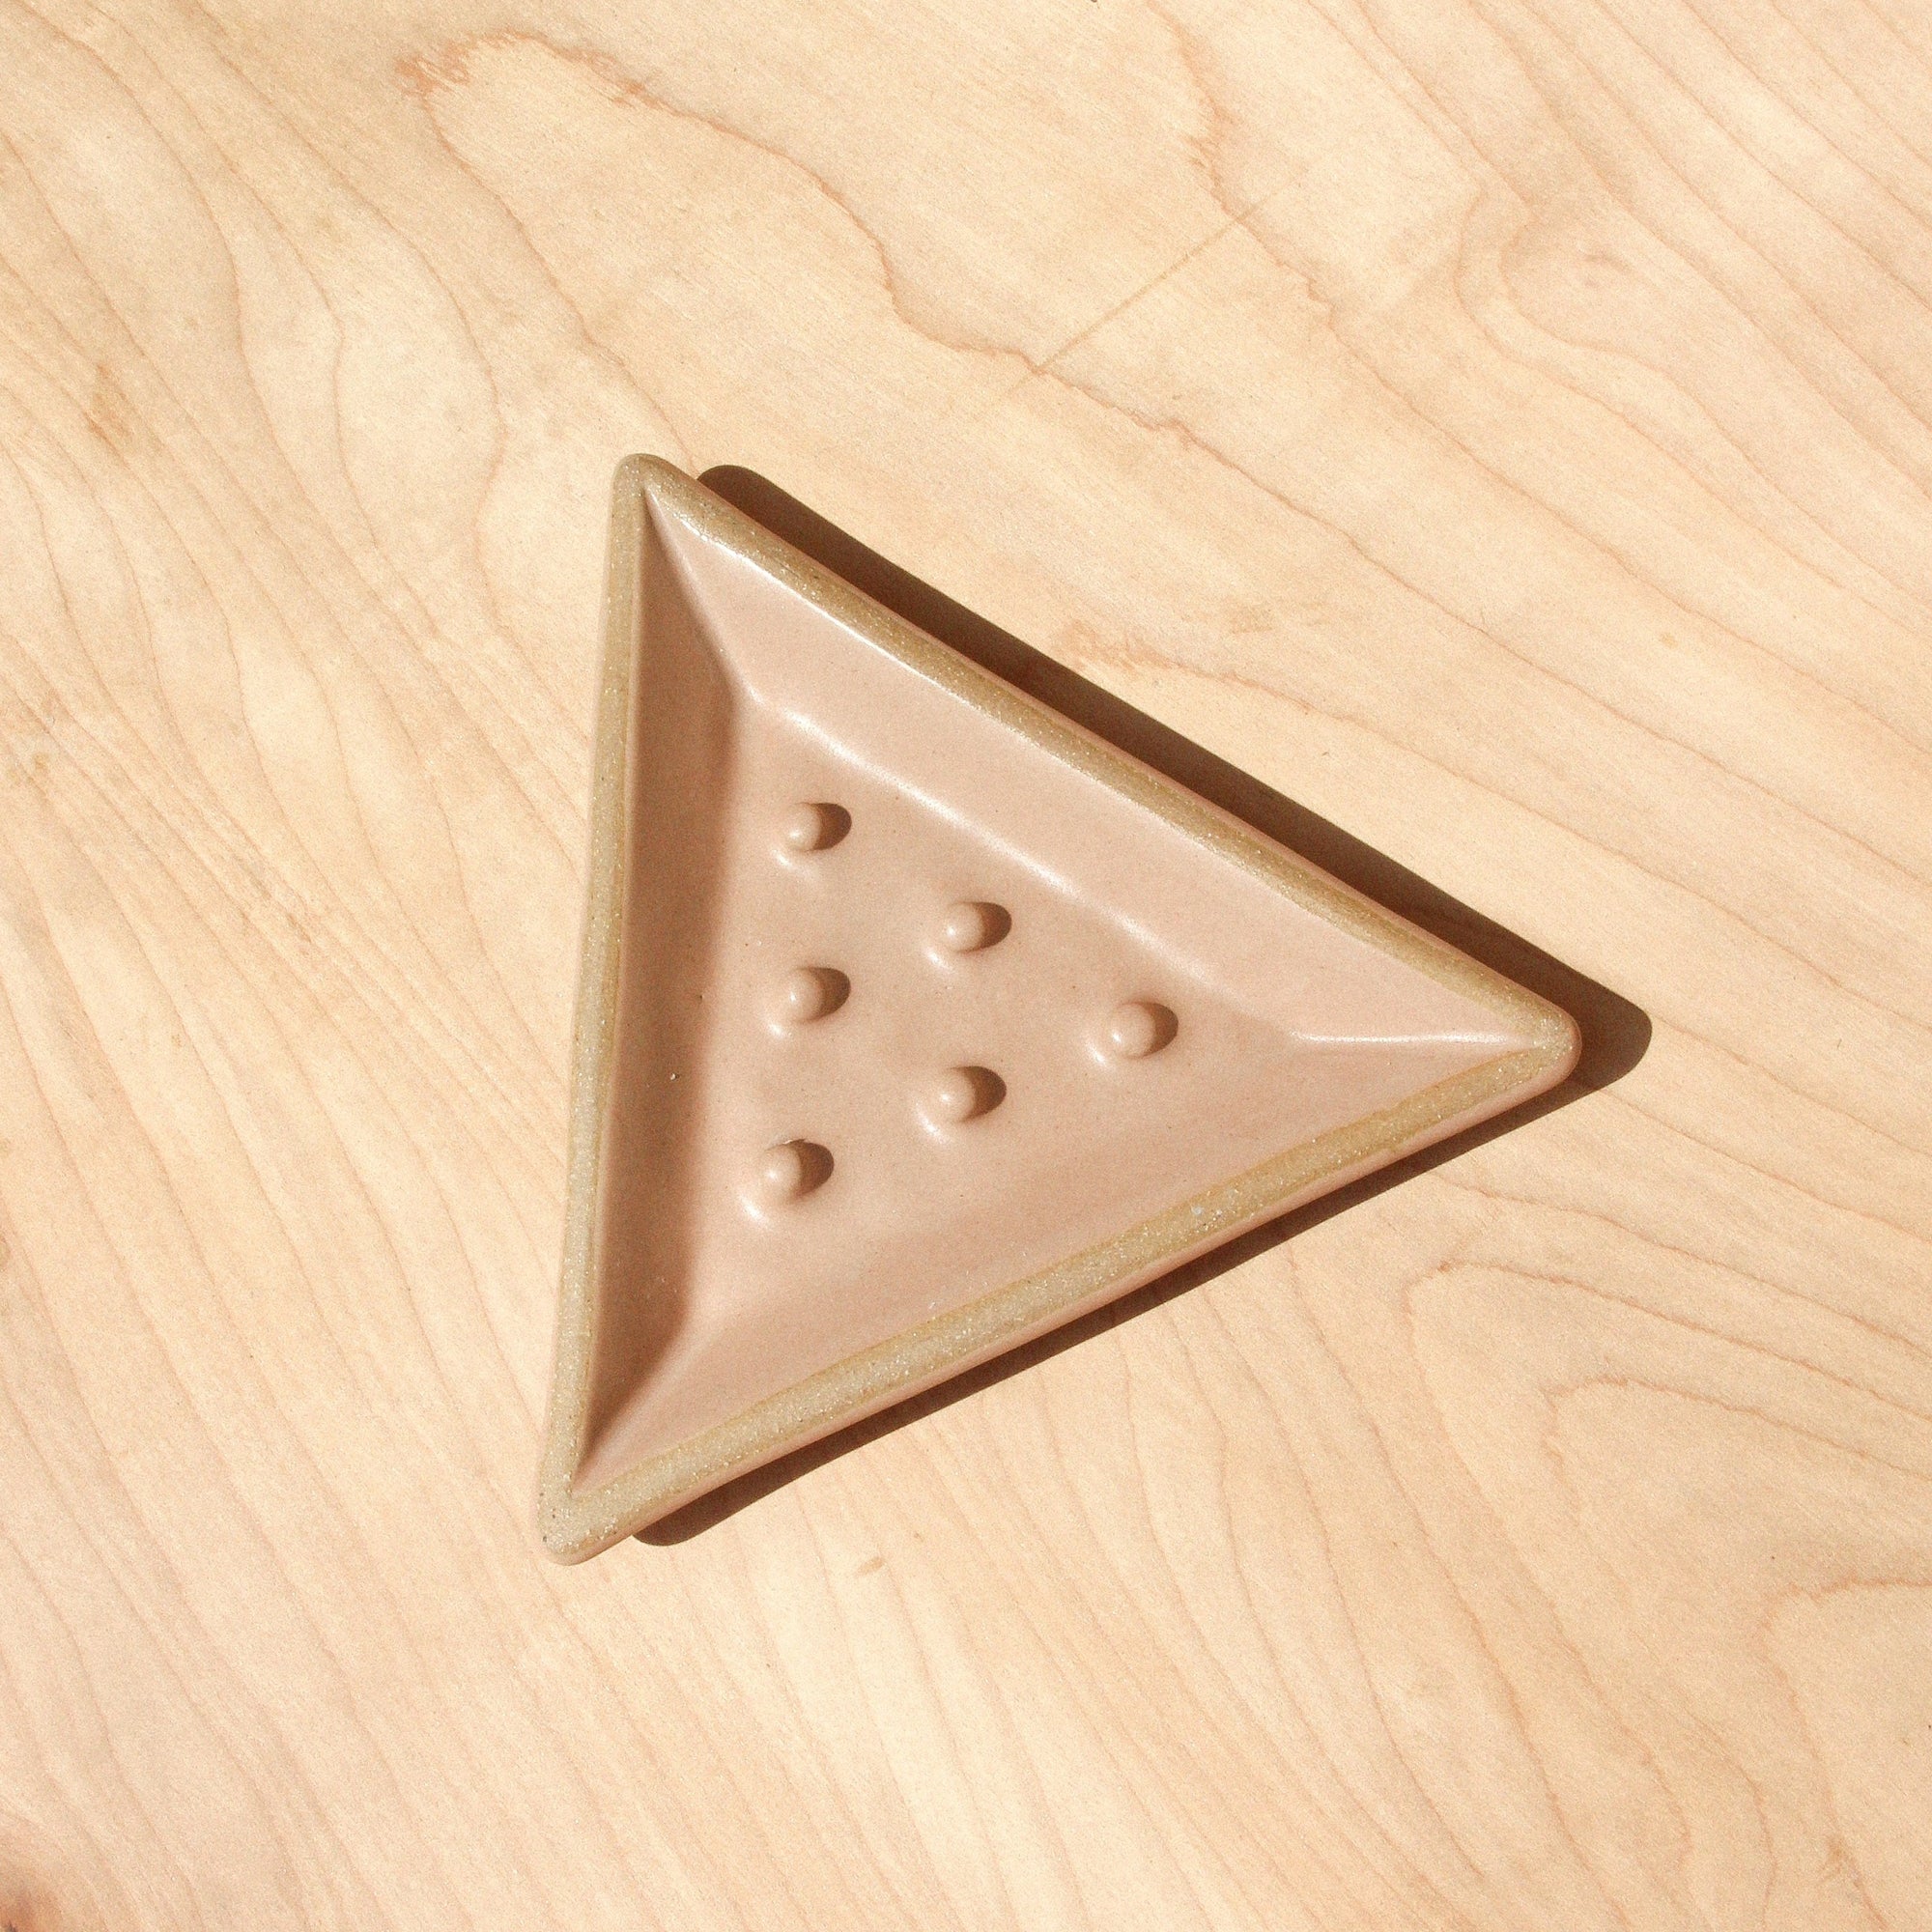 A triangular ceramic soap dish against wood grain